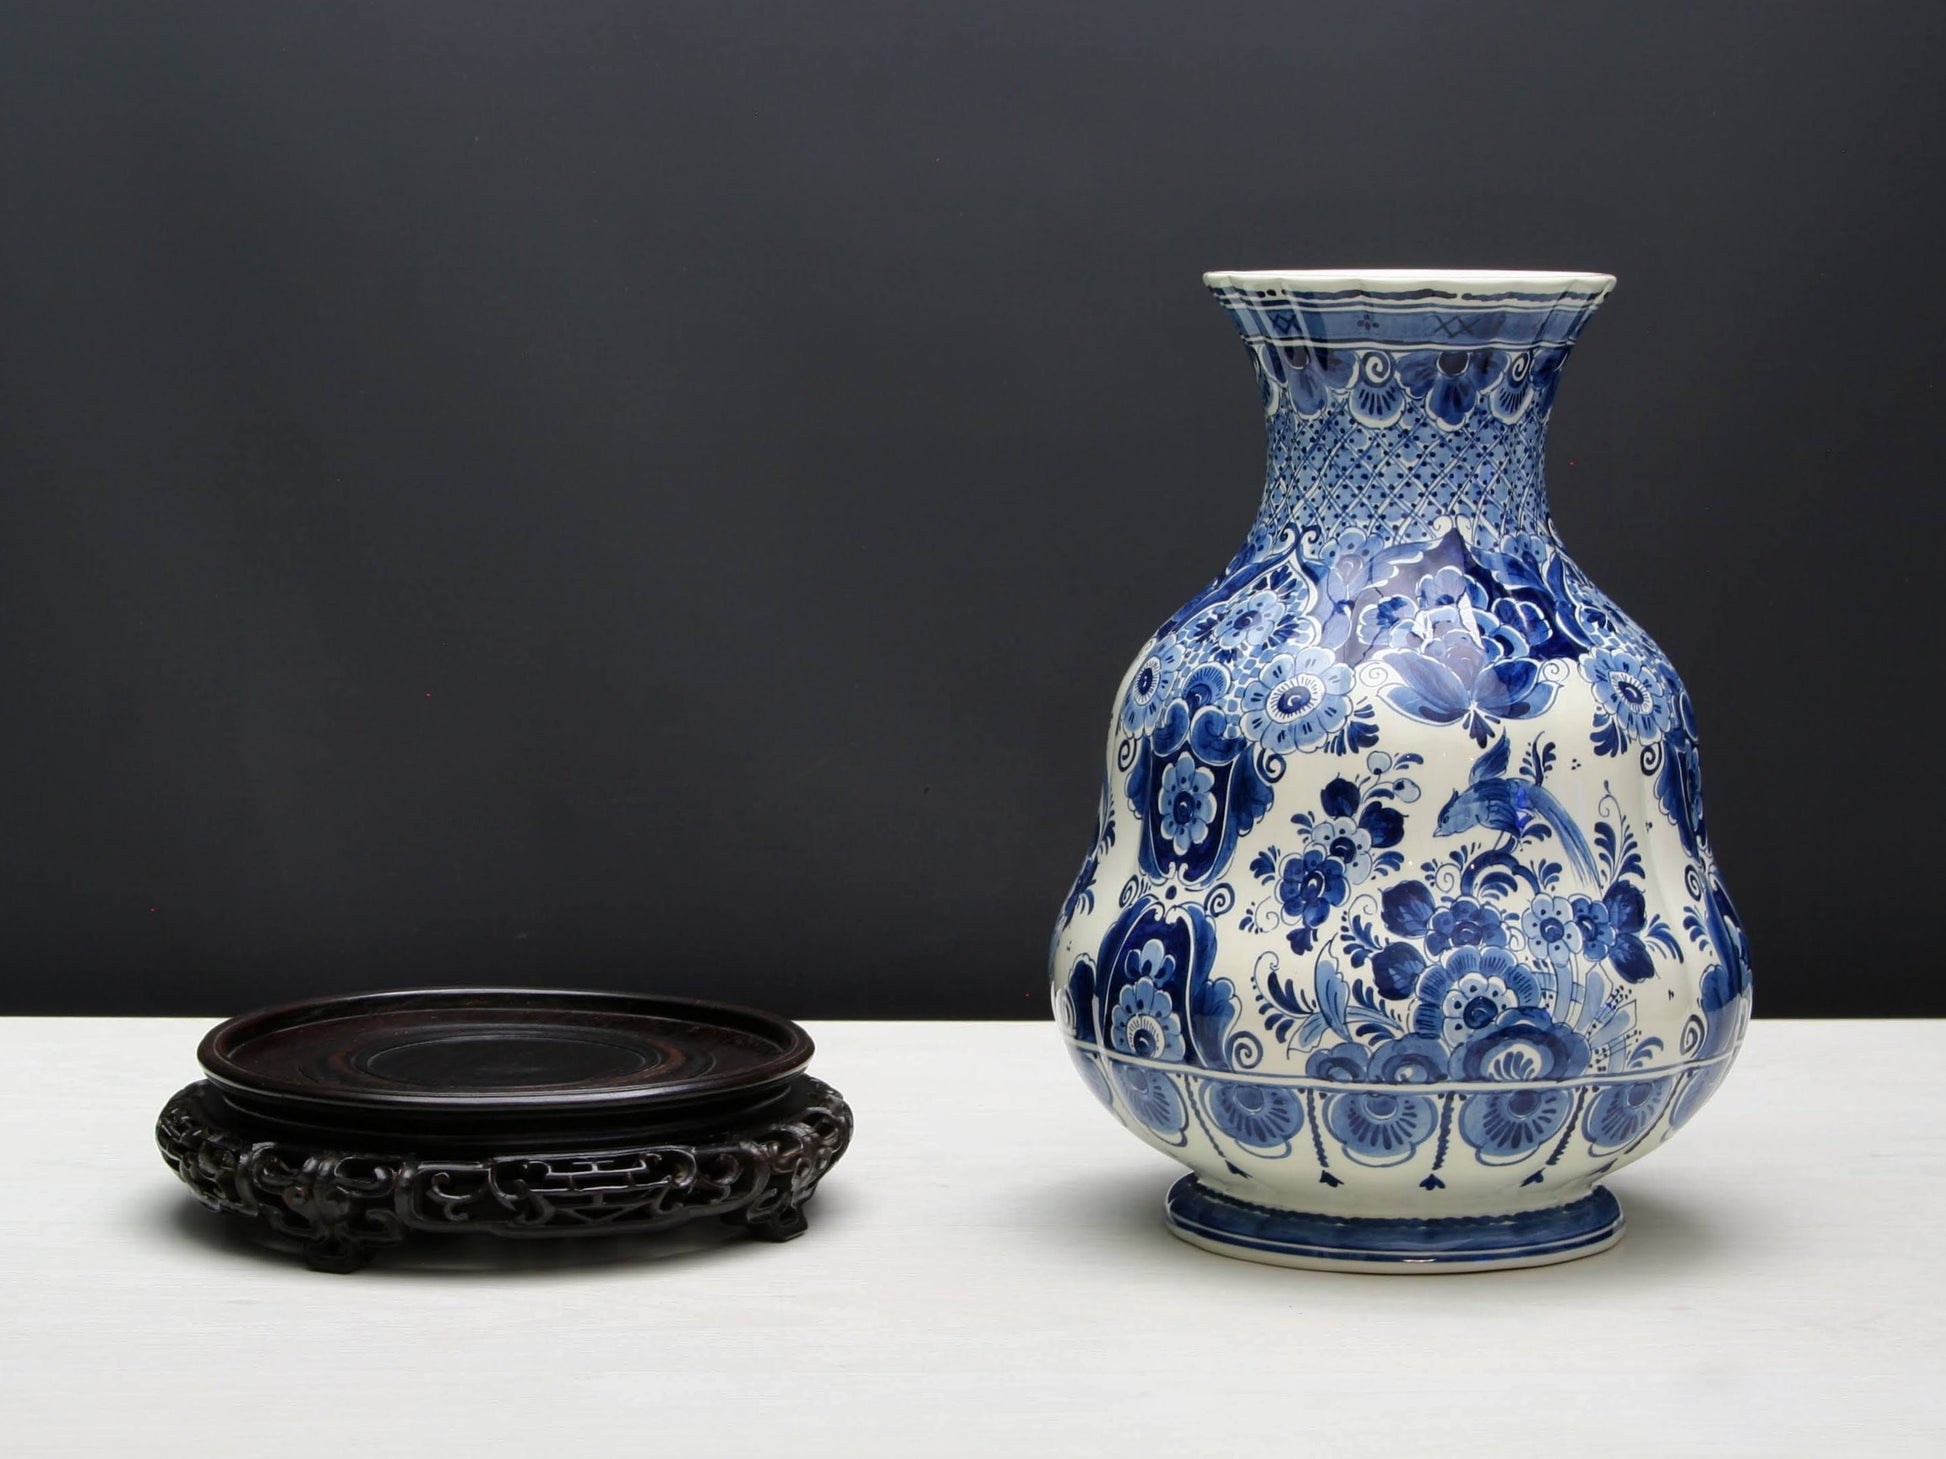 Delft Blue and White Vase with Wood Stand | Ceramic Vase for Home Decorations | Vintage Decor Flower Vase